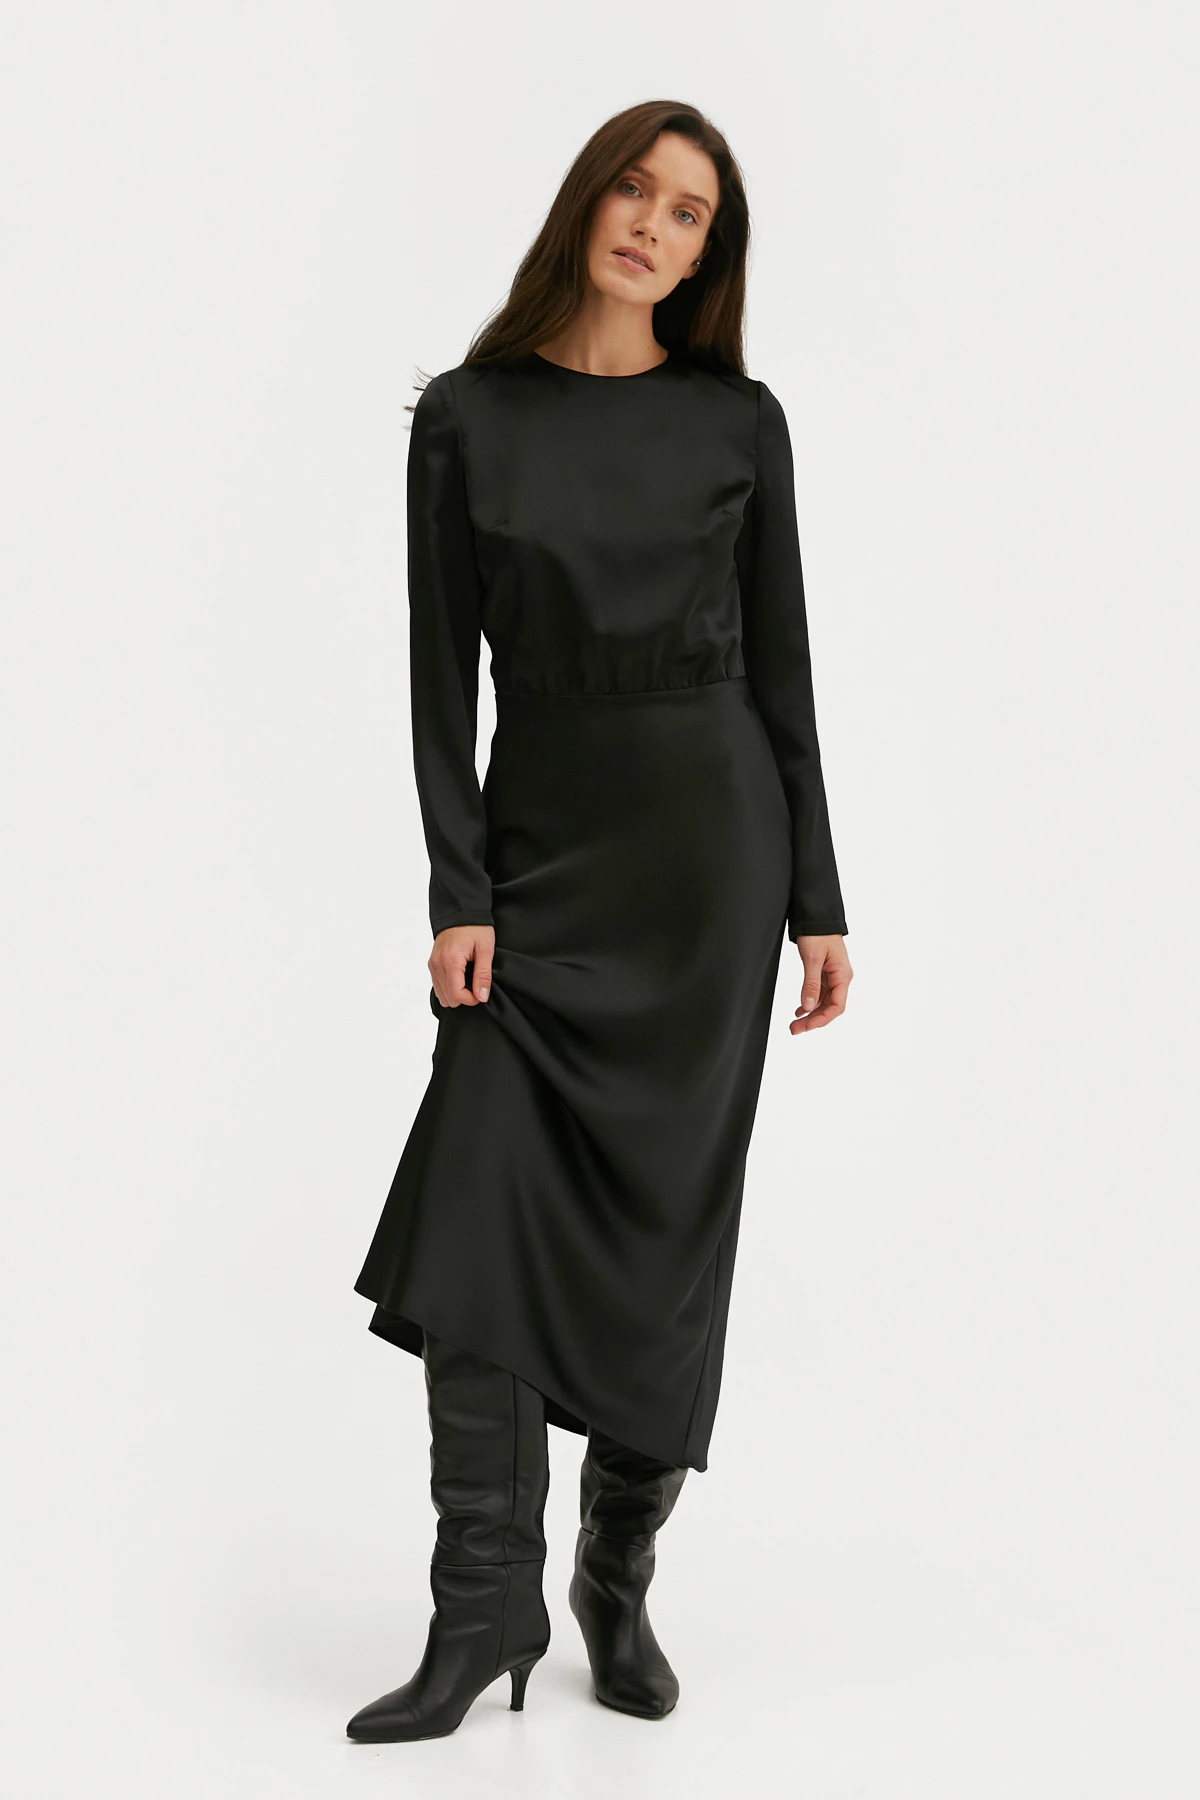 Satin black dress with sleeves, photo 2